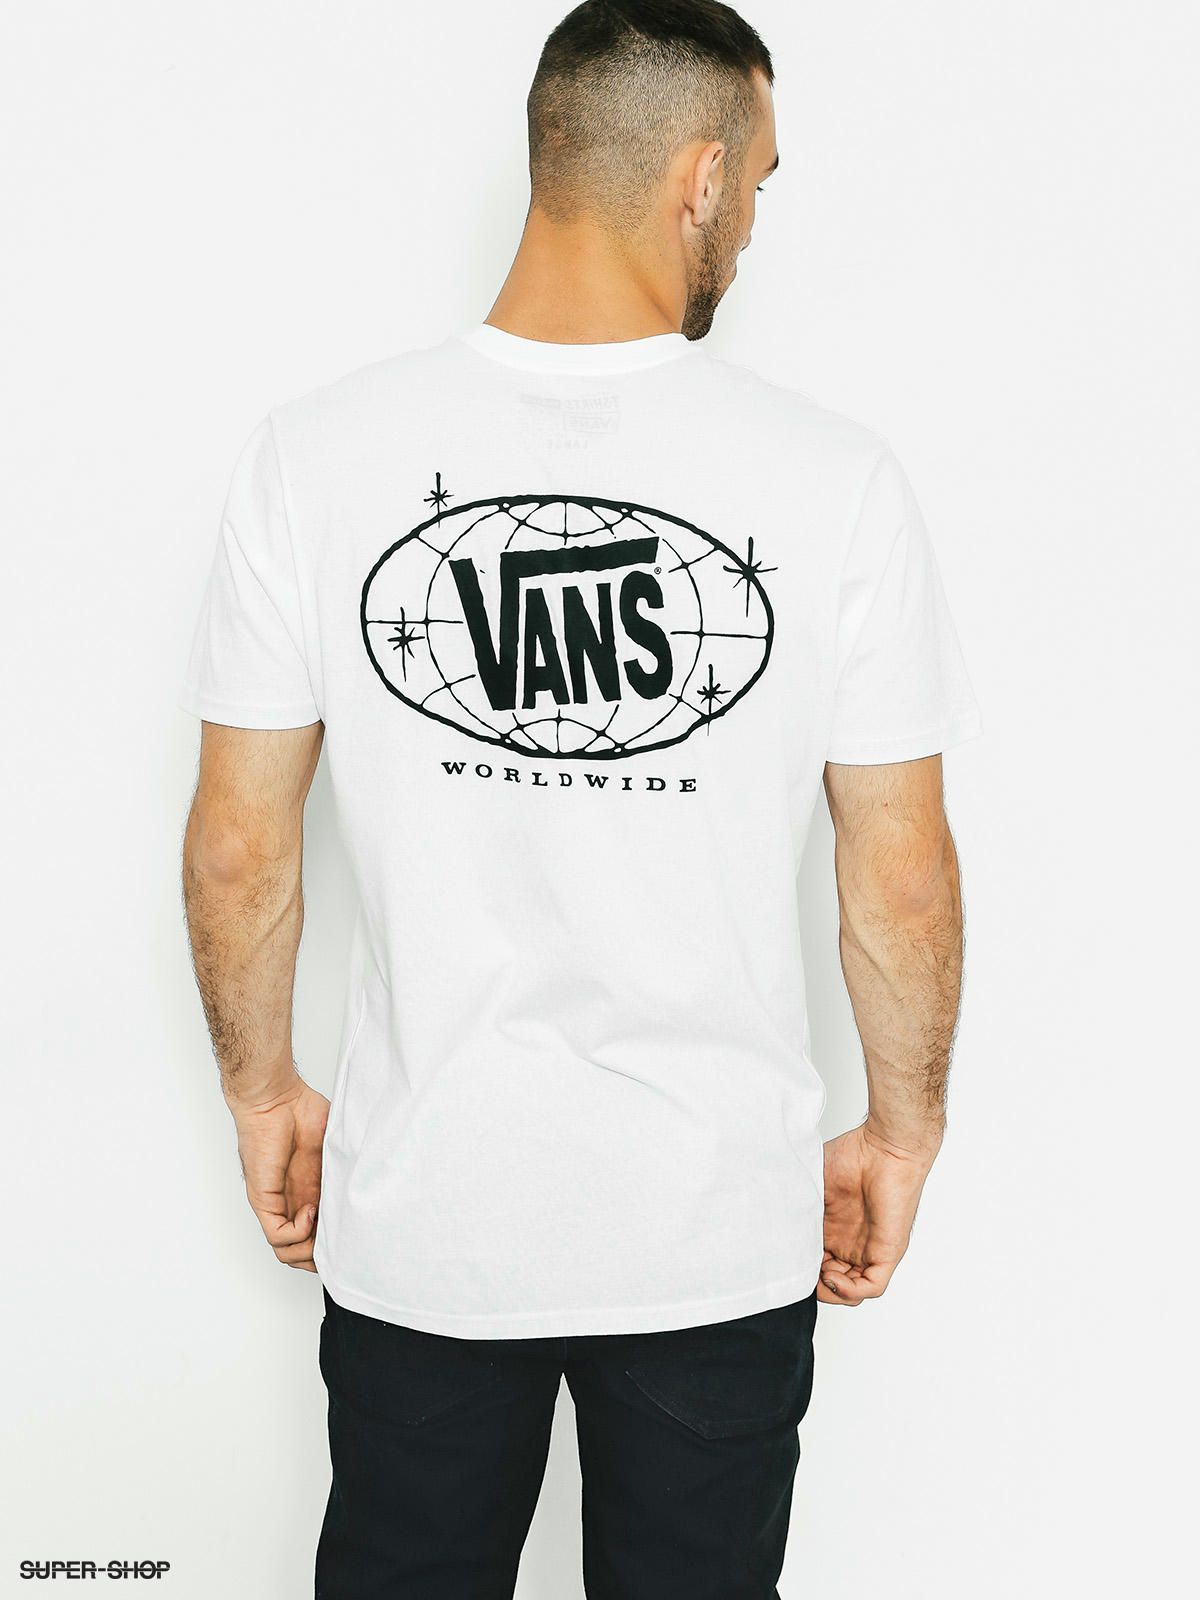 custom vans t shirts